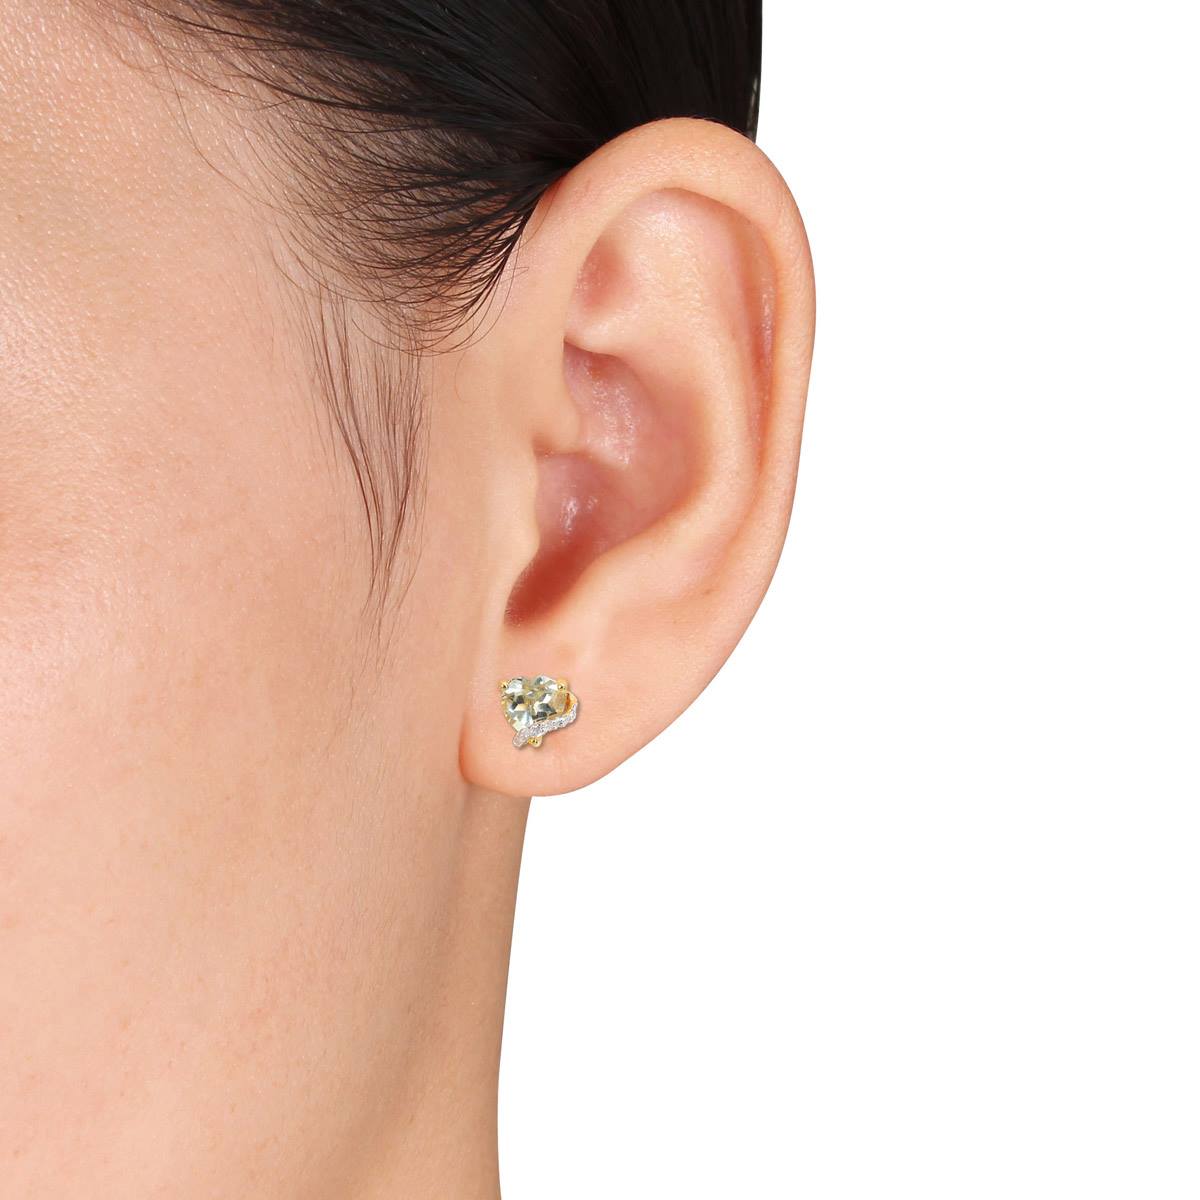 Gemstone Classics(tm) Gold Plated Green Quartz/Diamond Stud Earrings